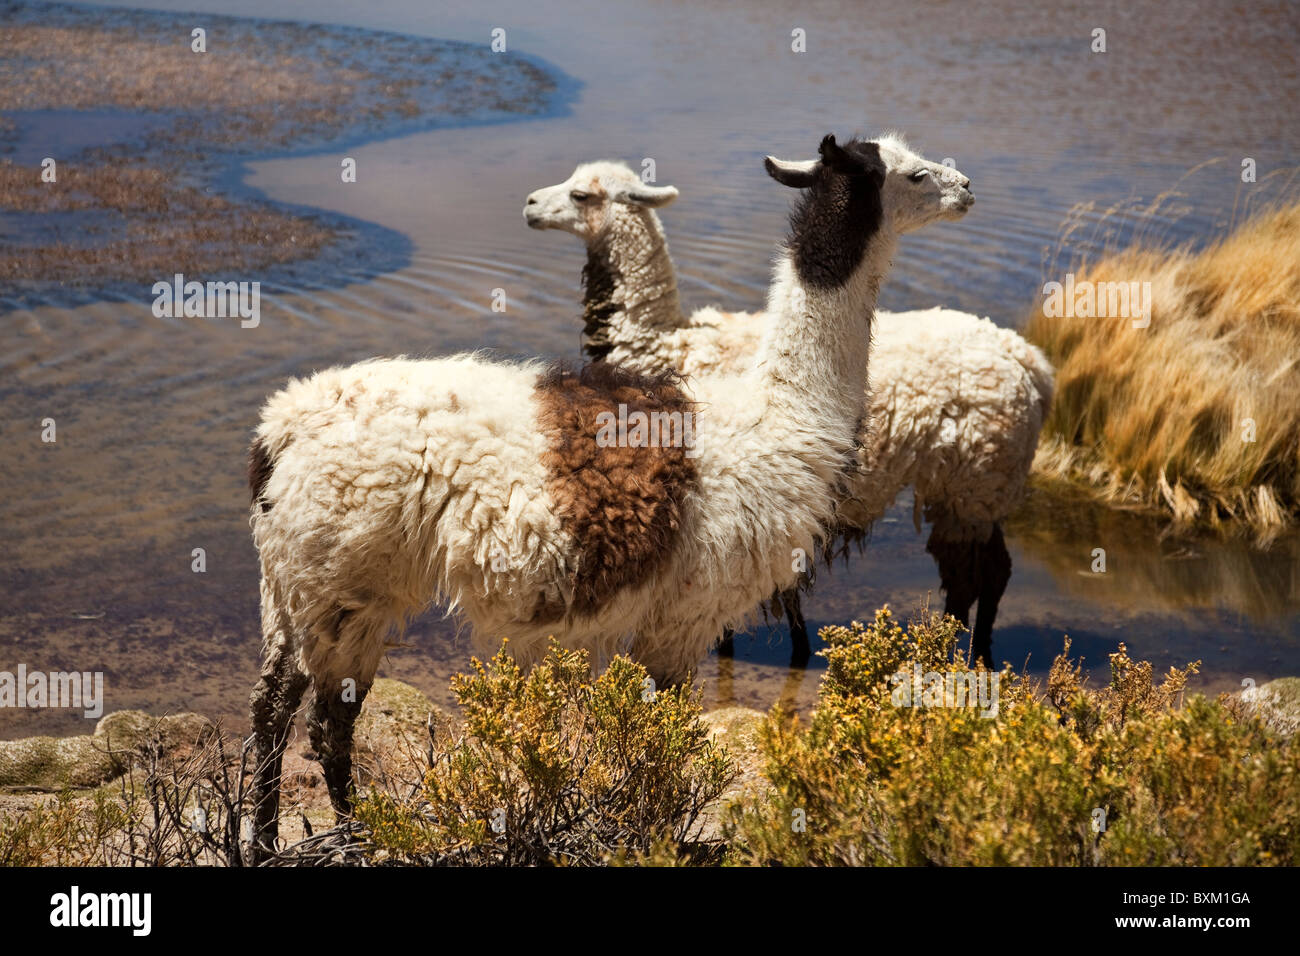 Two Llamas by lake shore, Bolivia, South America Stock Photo